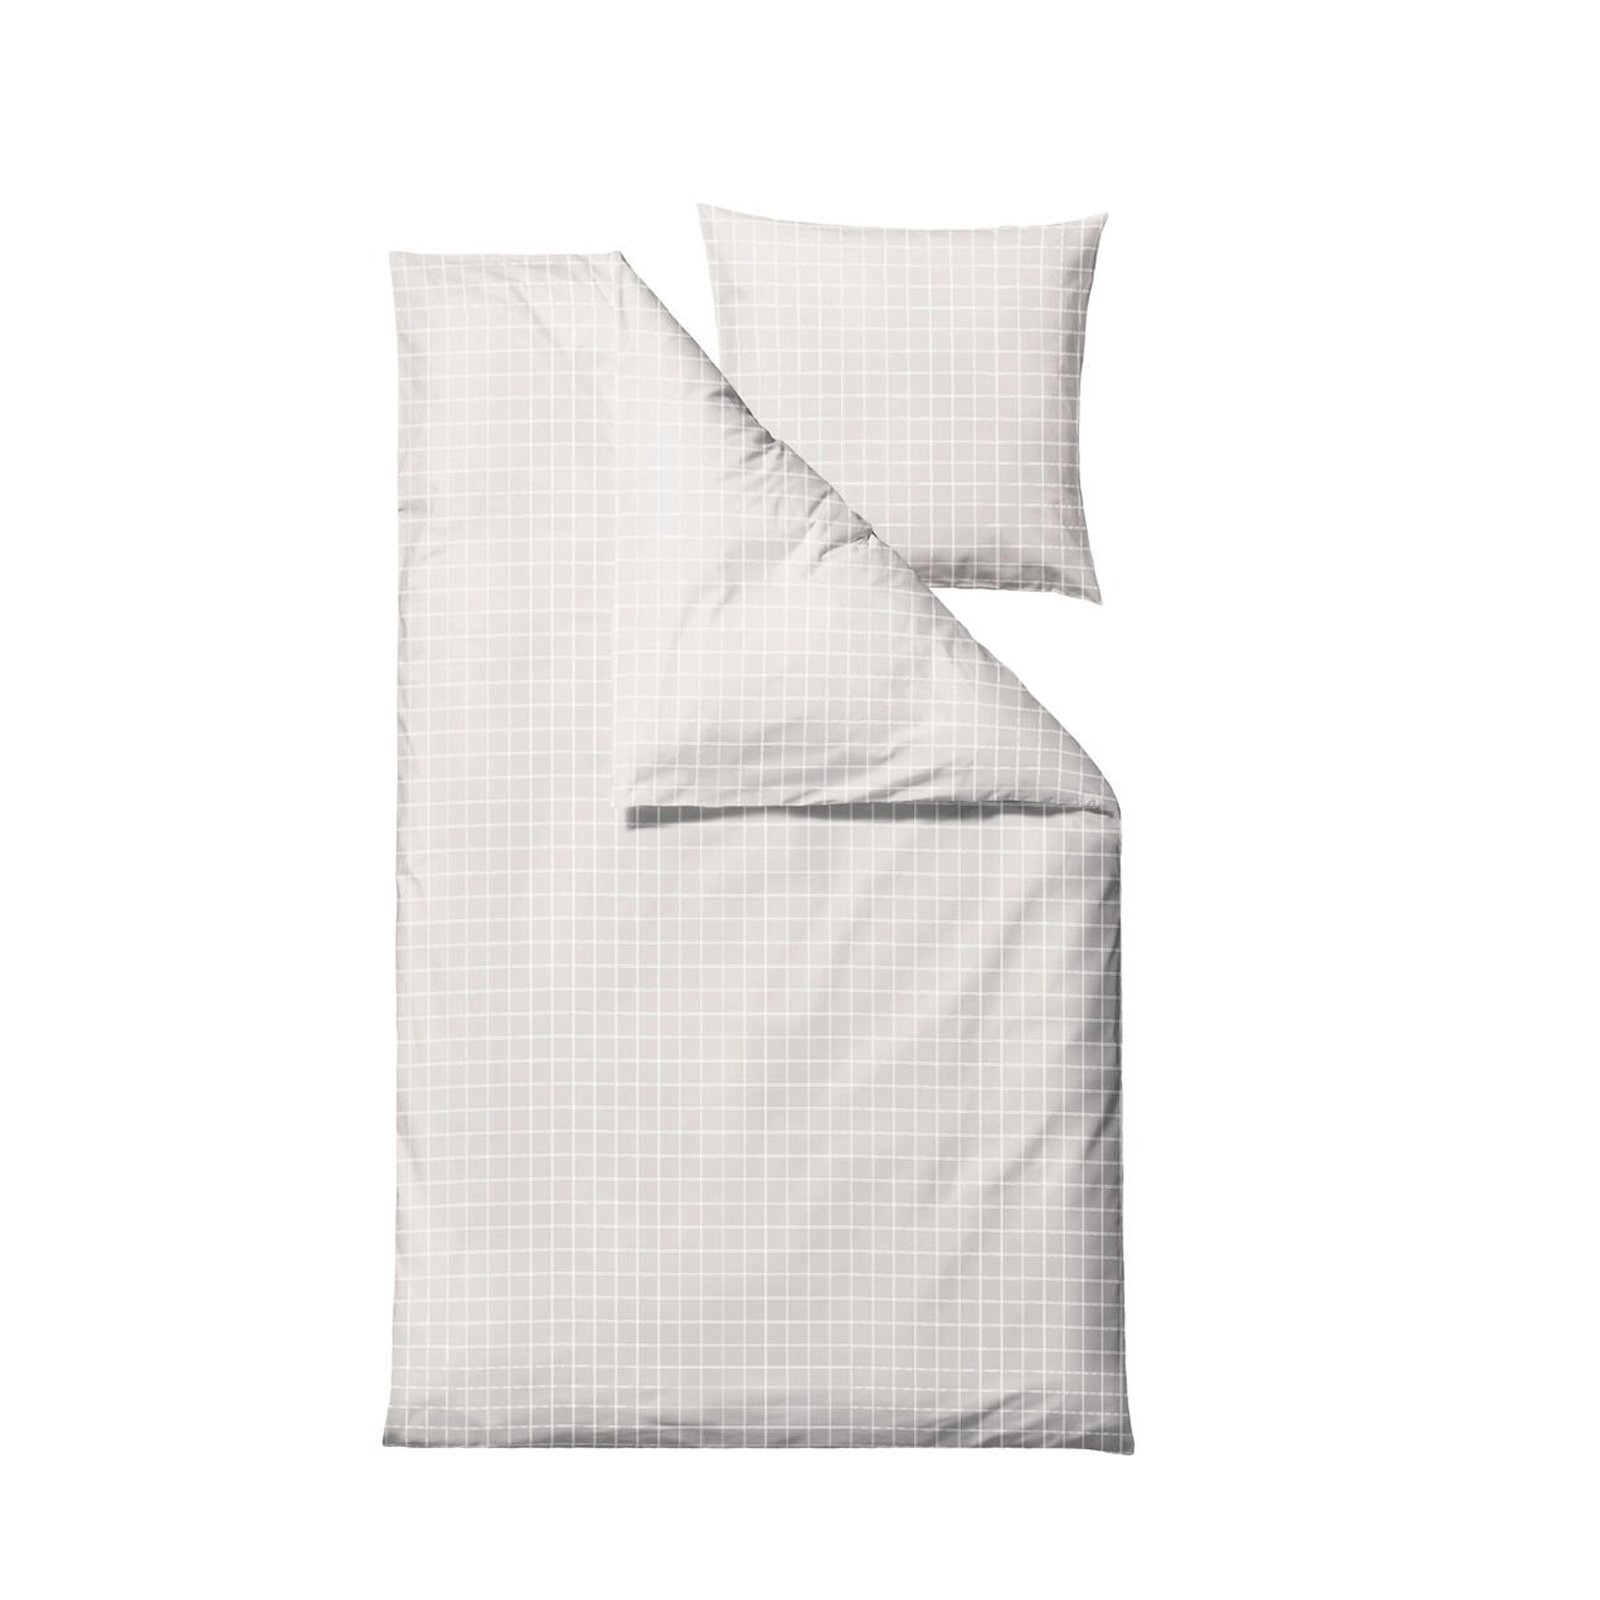 Södahl - Clear Bedding Sets 140 x 220 cm - White (12029)